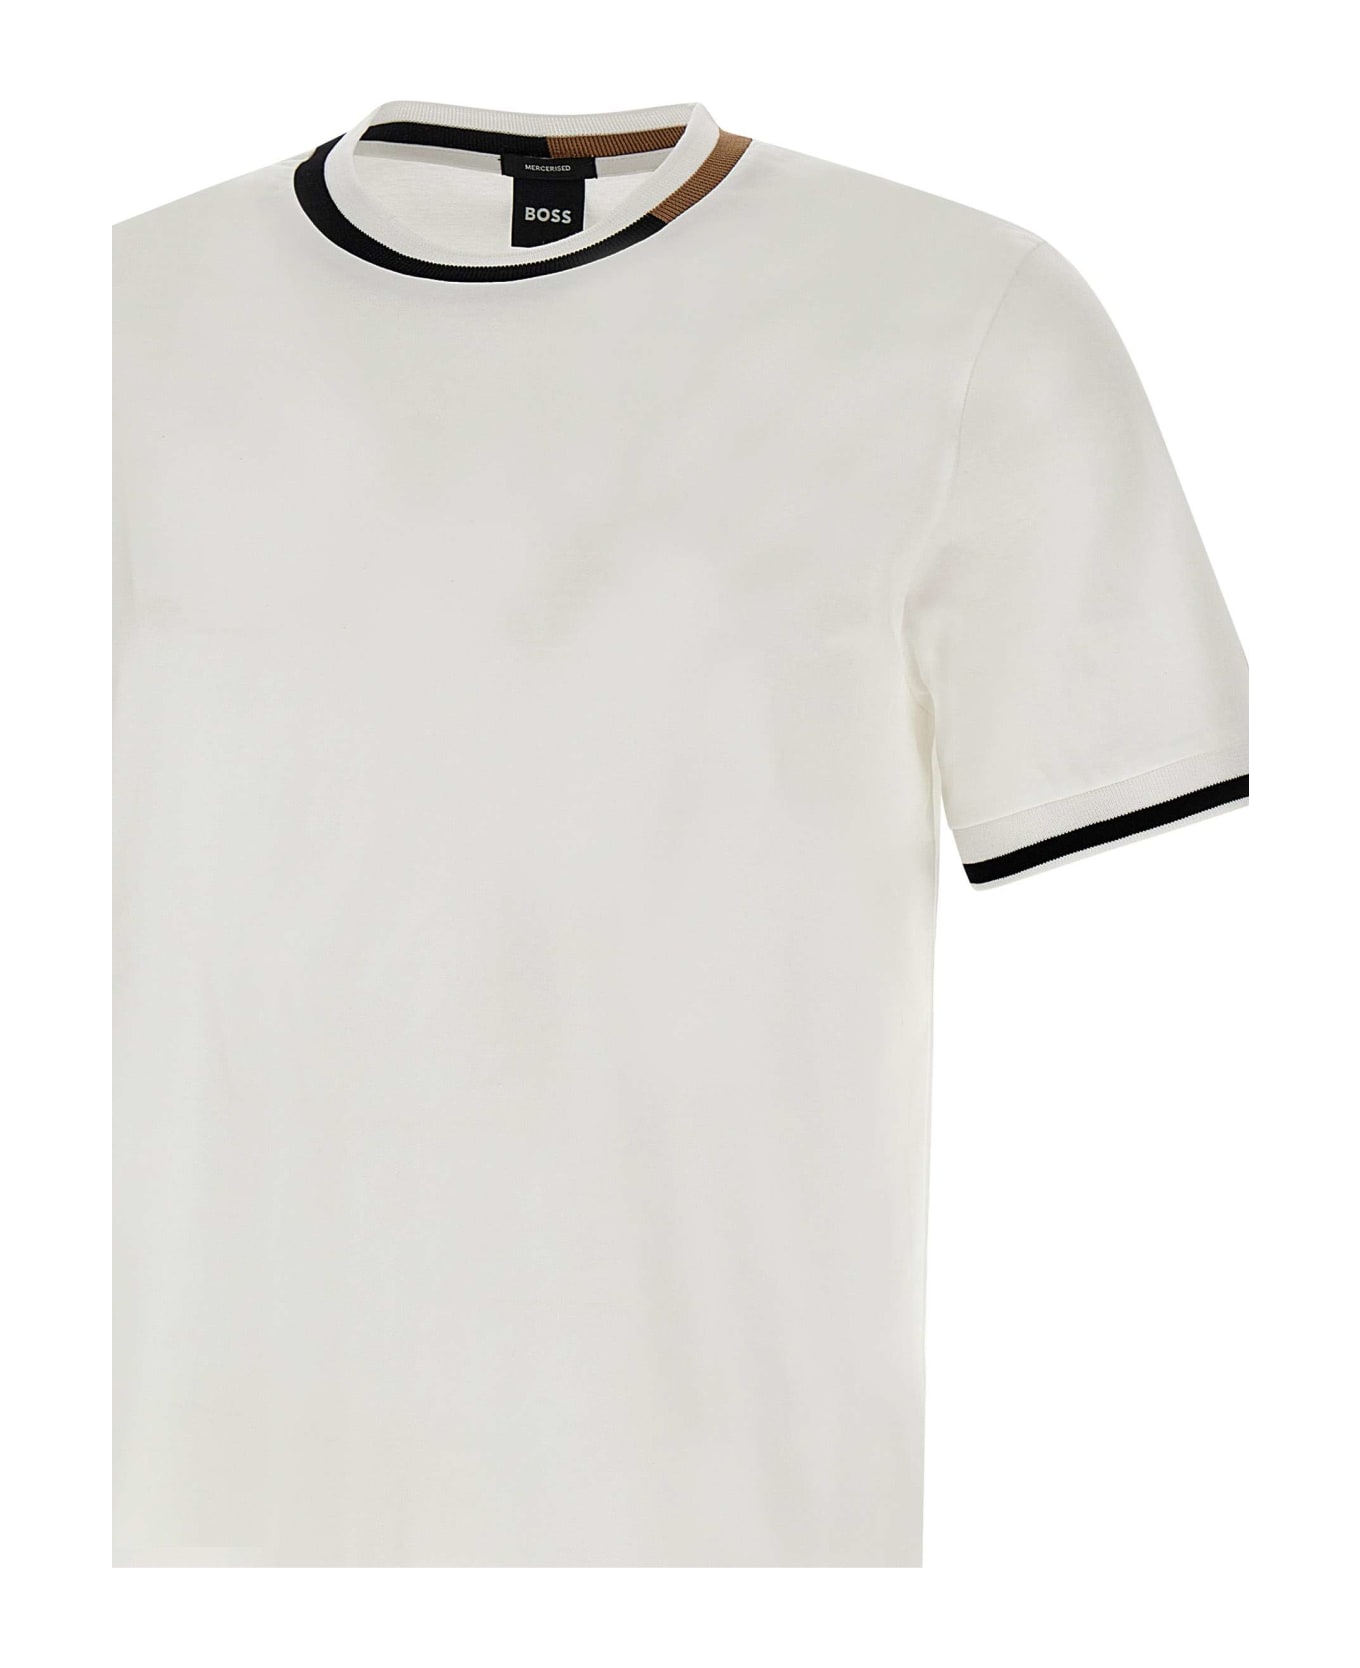 Hugo Boss "thompson" Mercerized Cotton T-shirt - WHITE